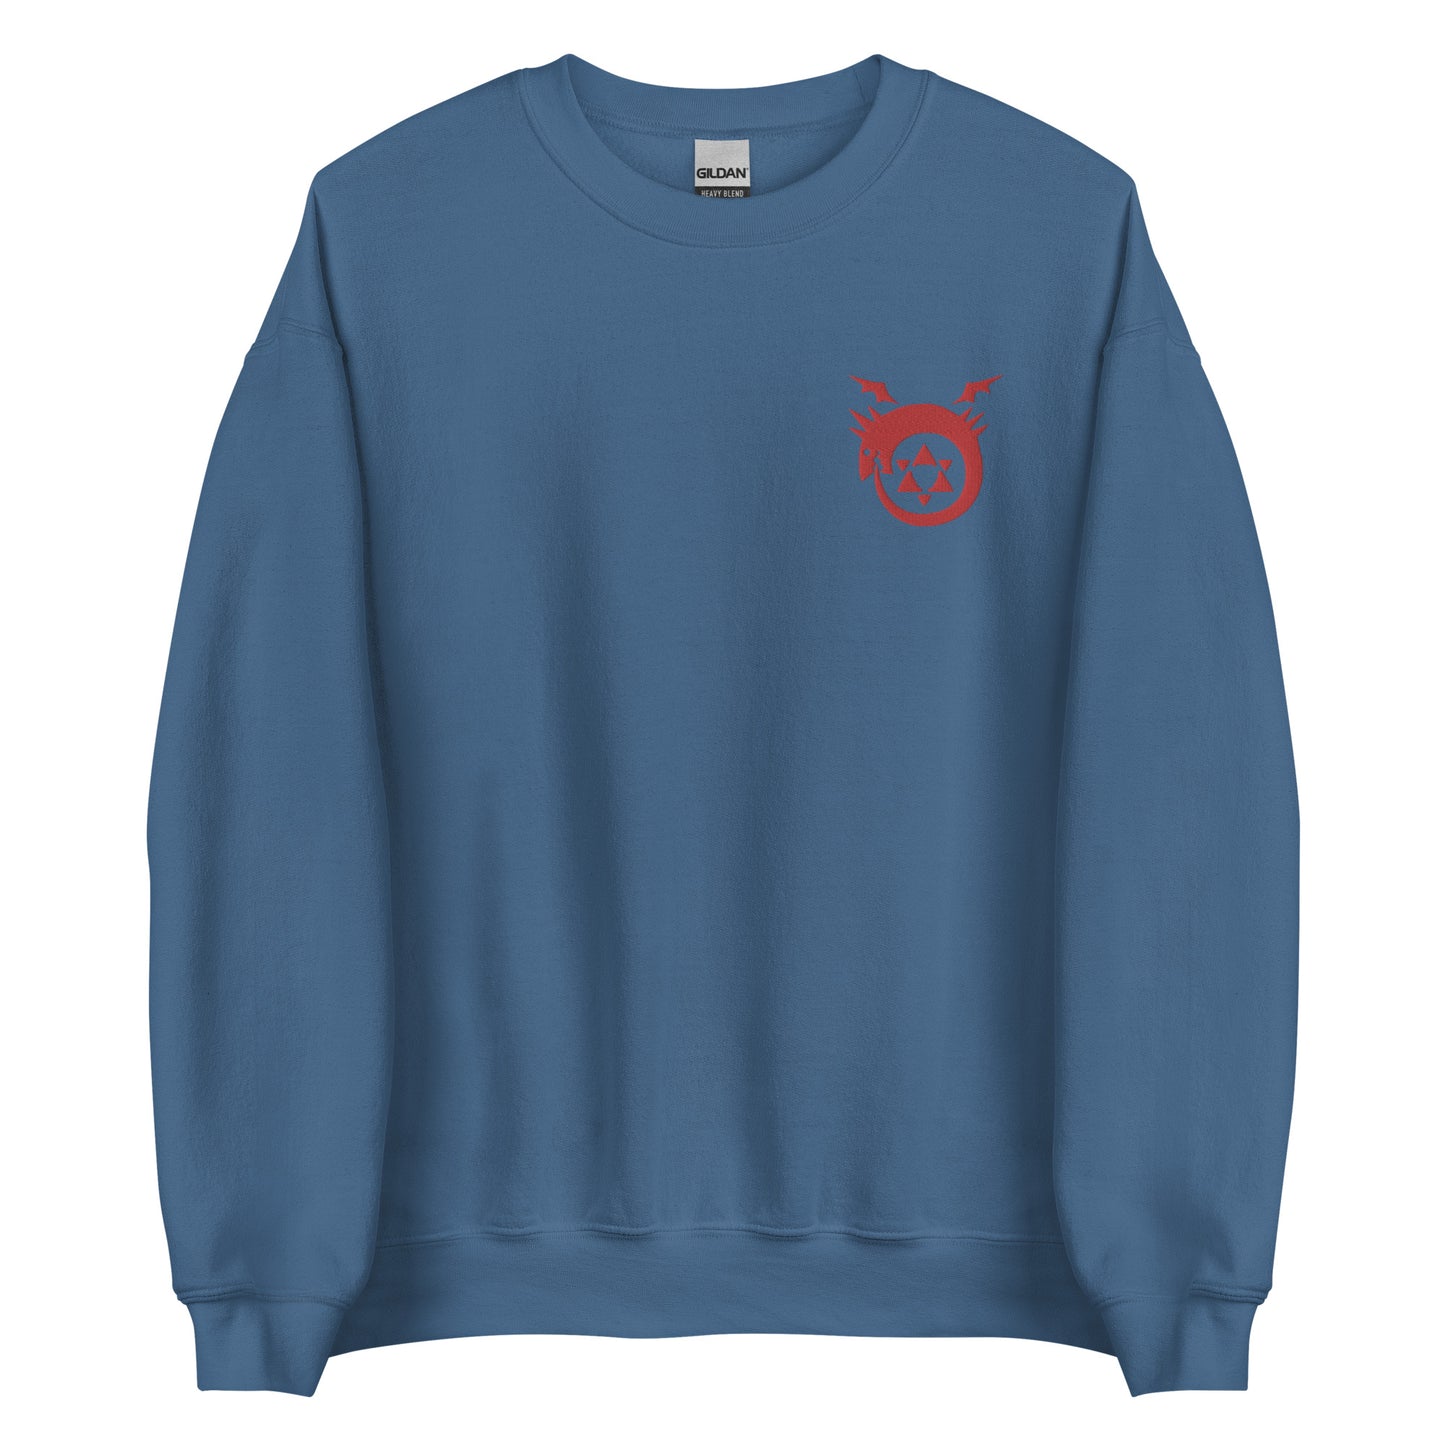 FMAs inspired Homunculus Embroidered Crewneck Sweatshirt